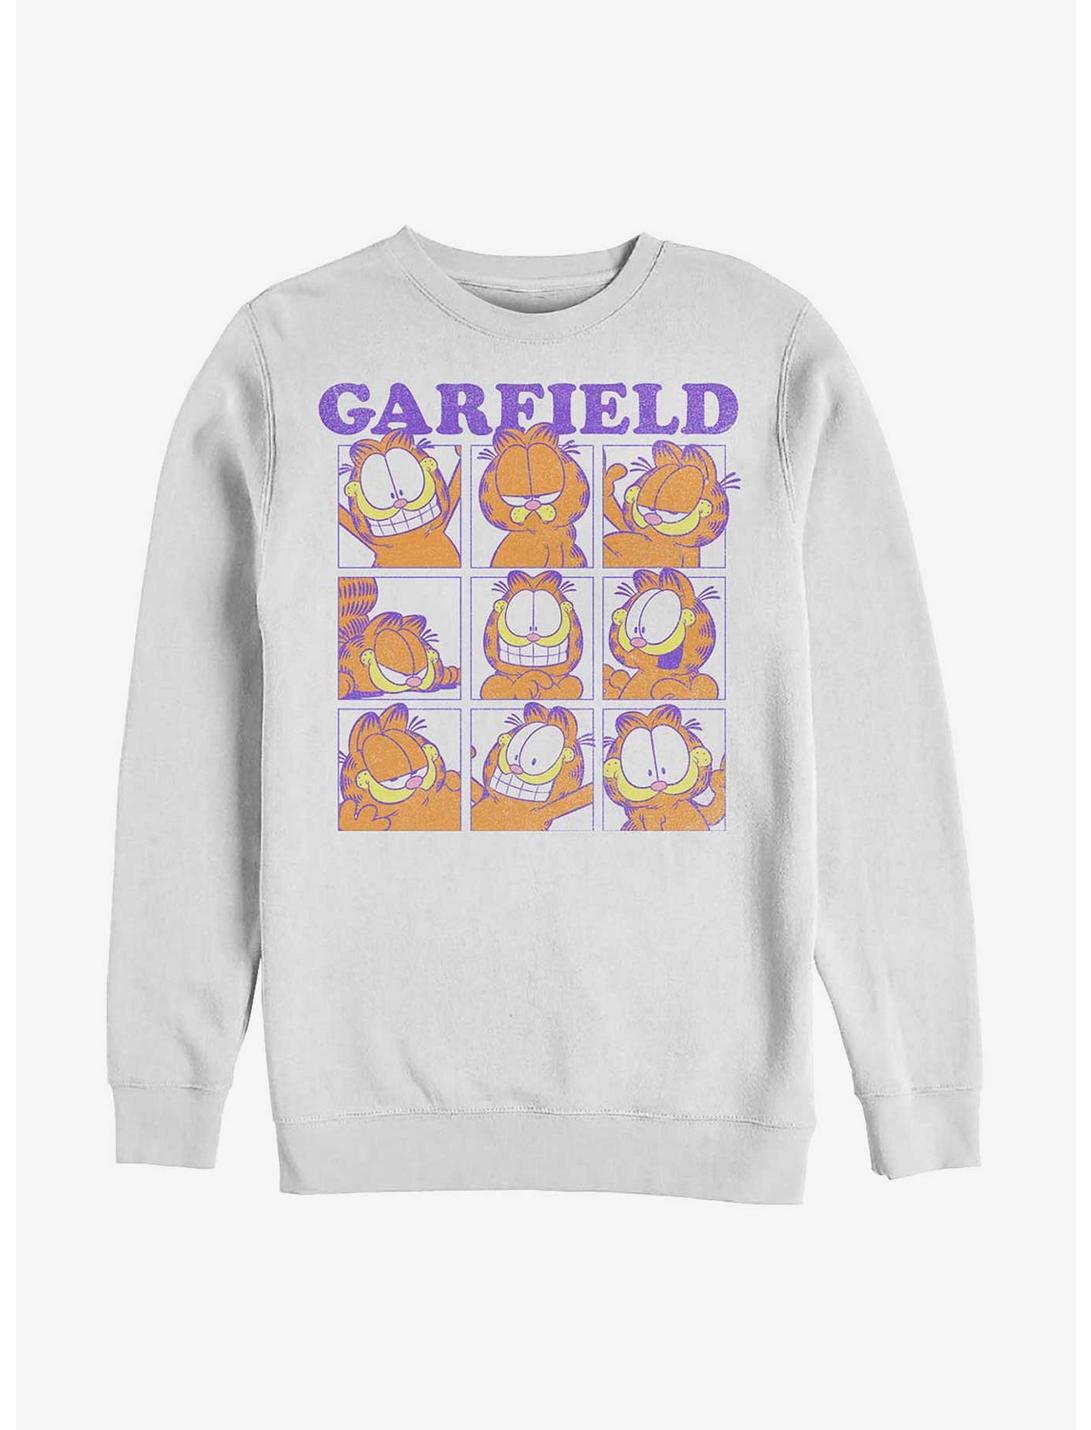 Garfield Many Faces of Garfield Sweatshirt, WHITE, hi-res